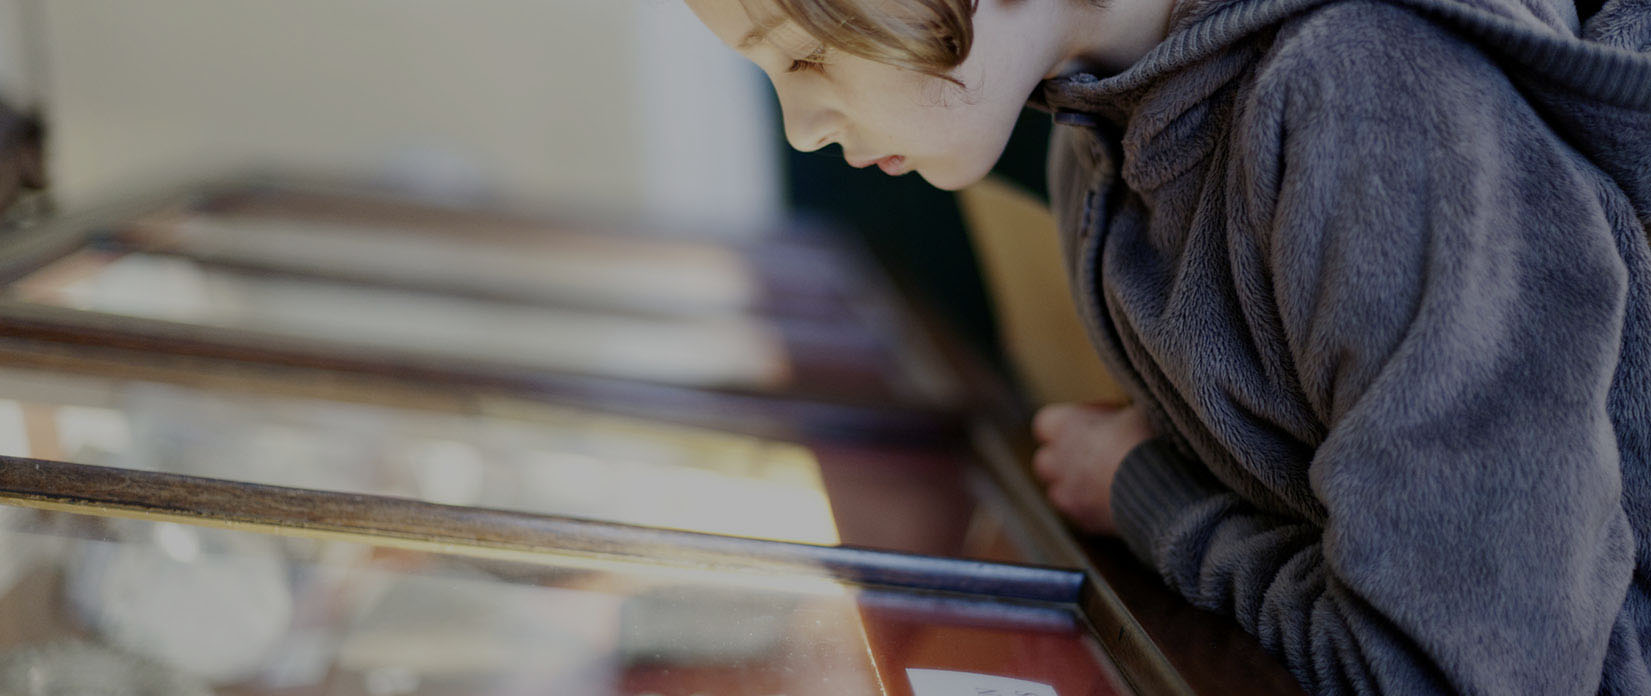 child peering into museum display case